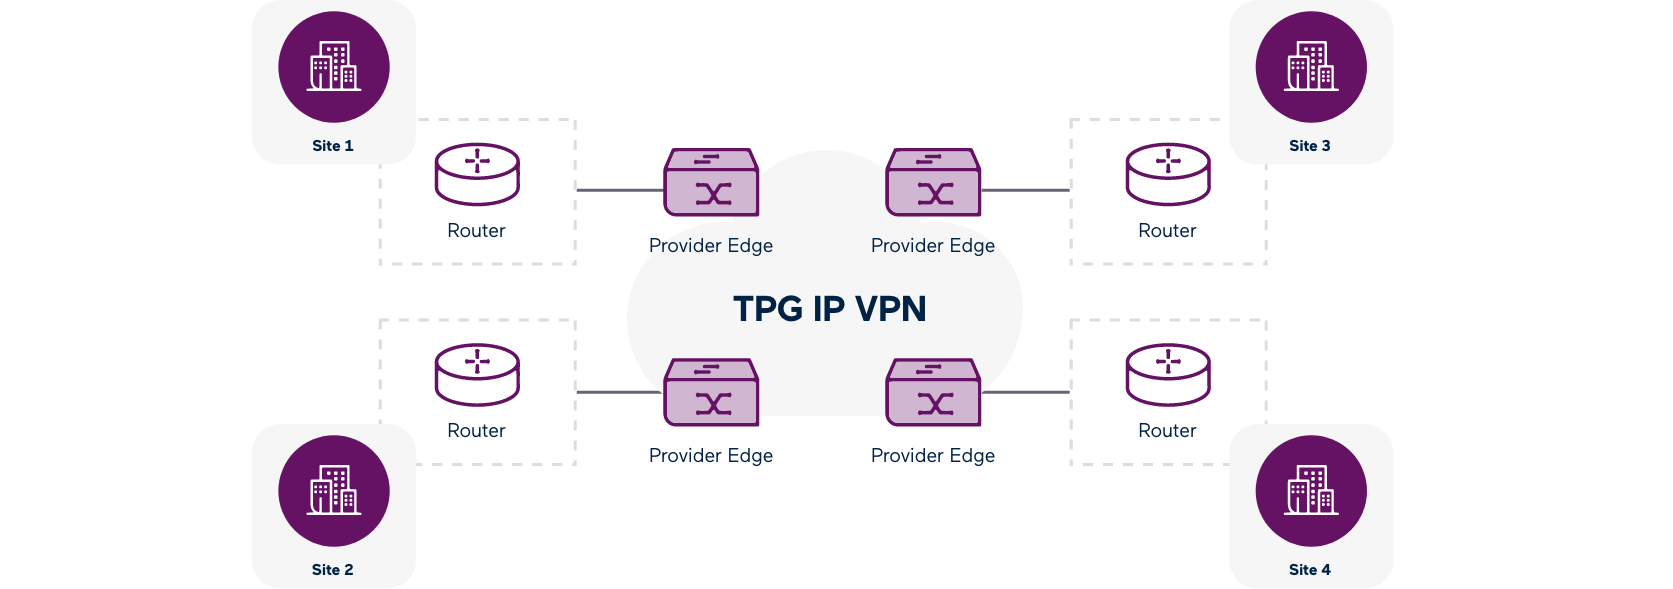 How TPG IP VPN works